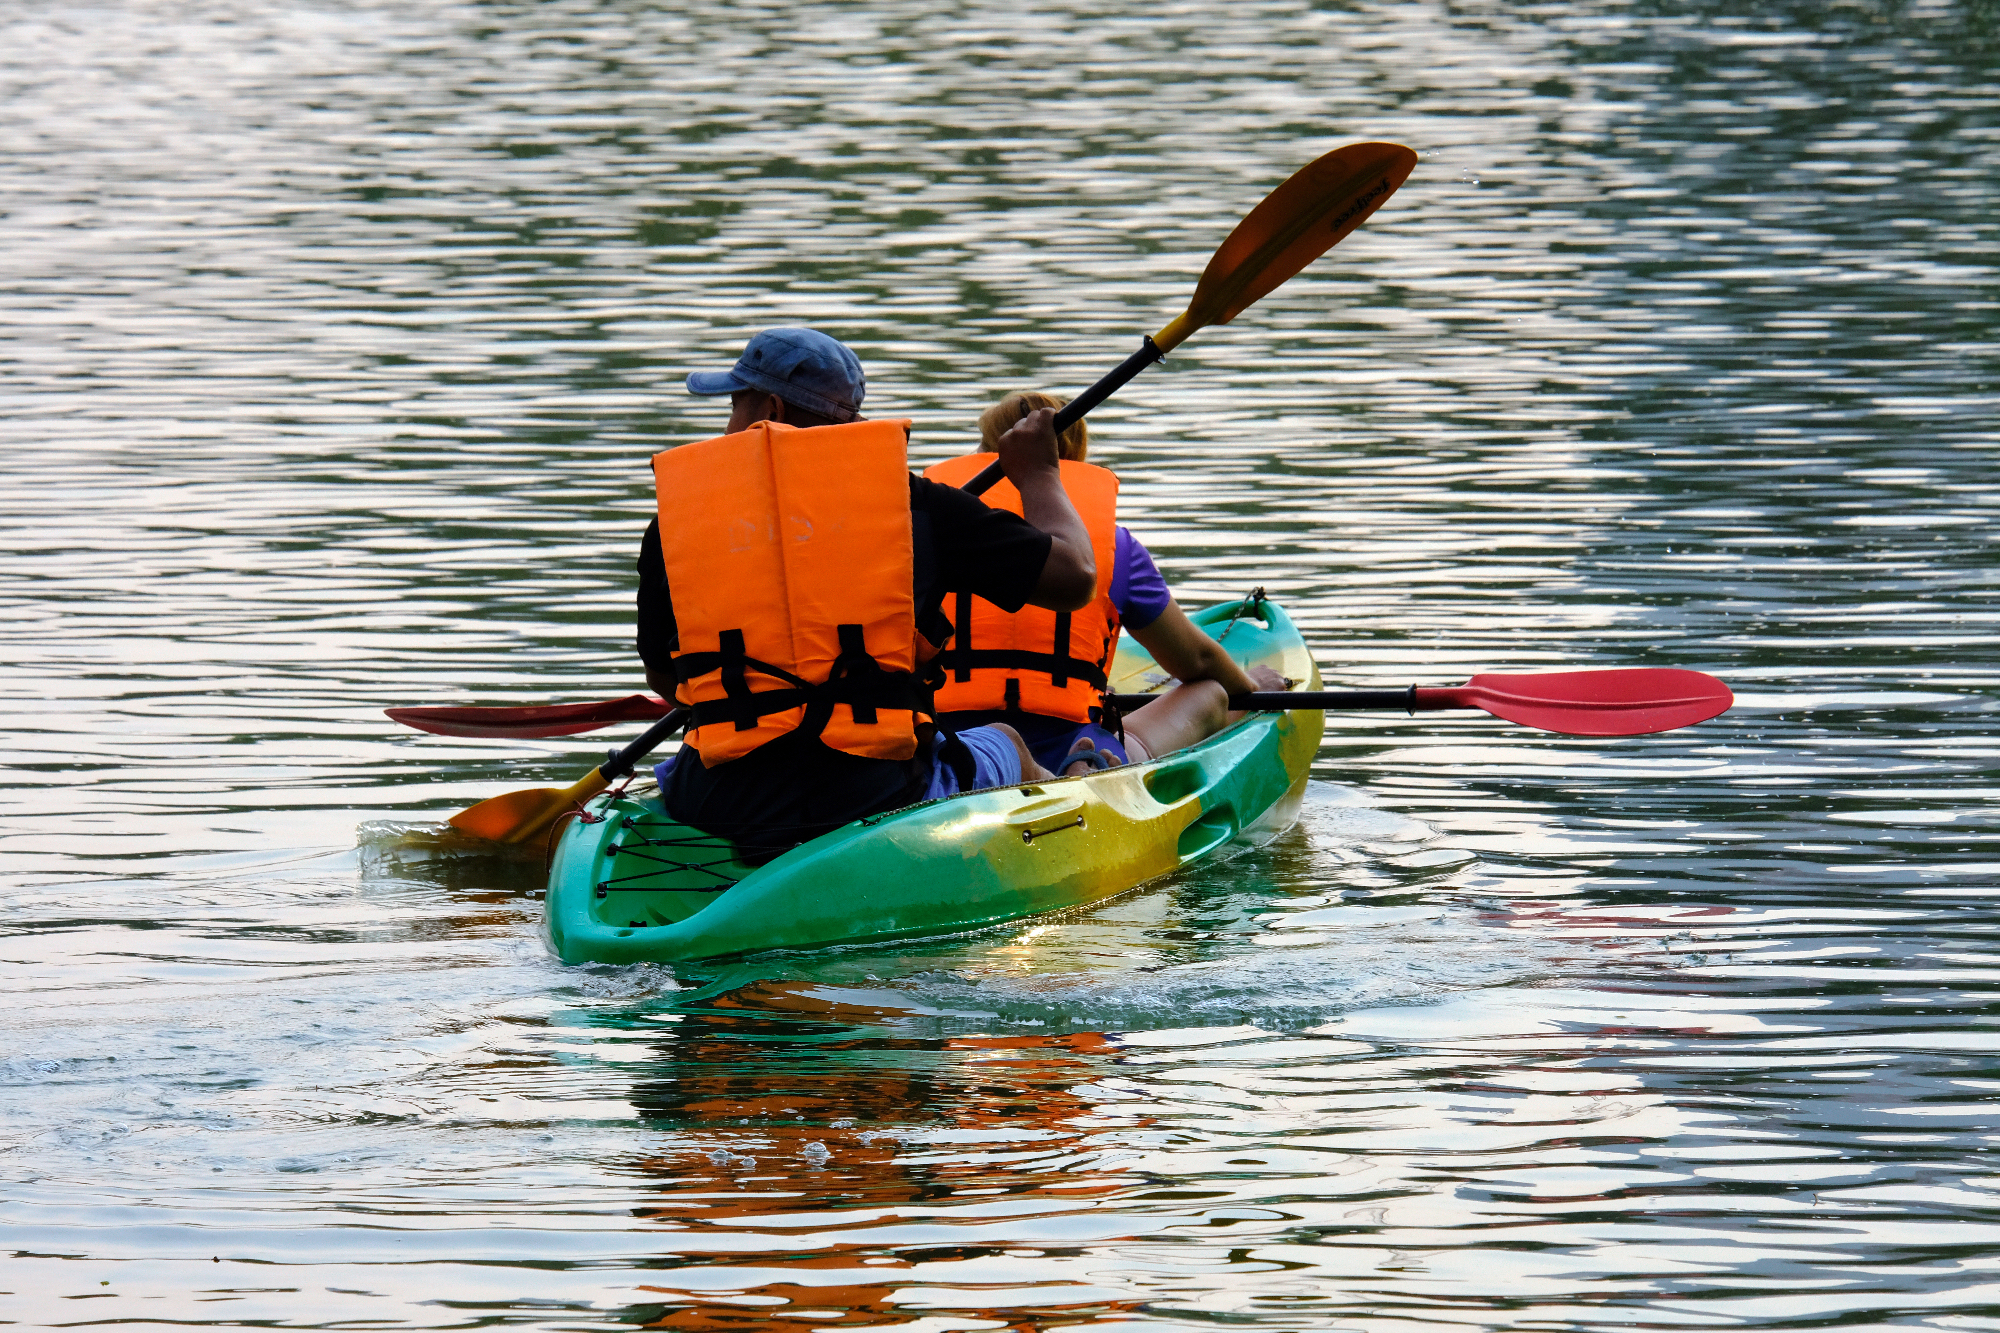 Pantaloni kayak sono comodi e pratici